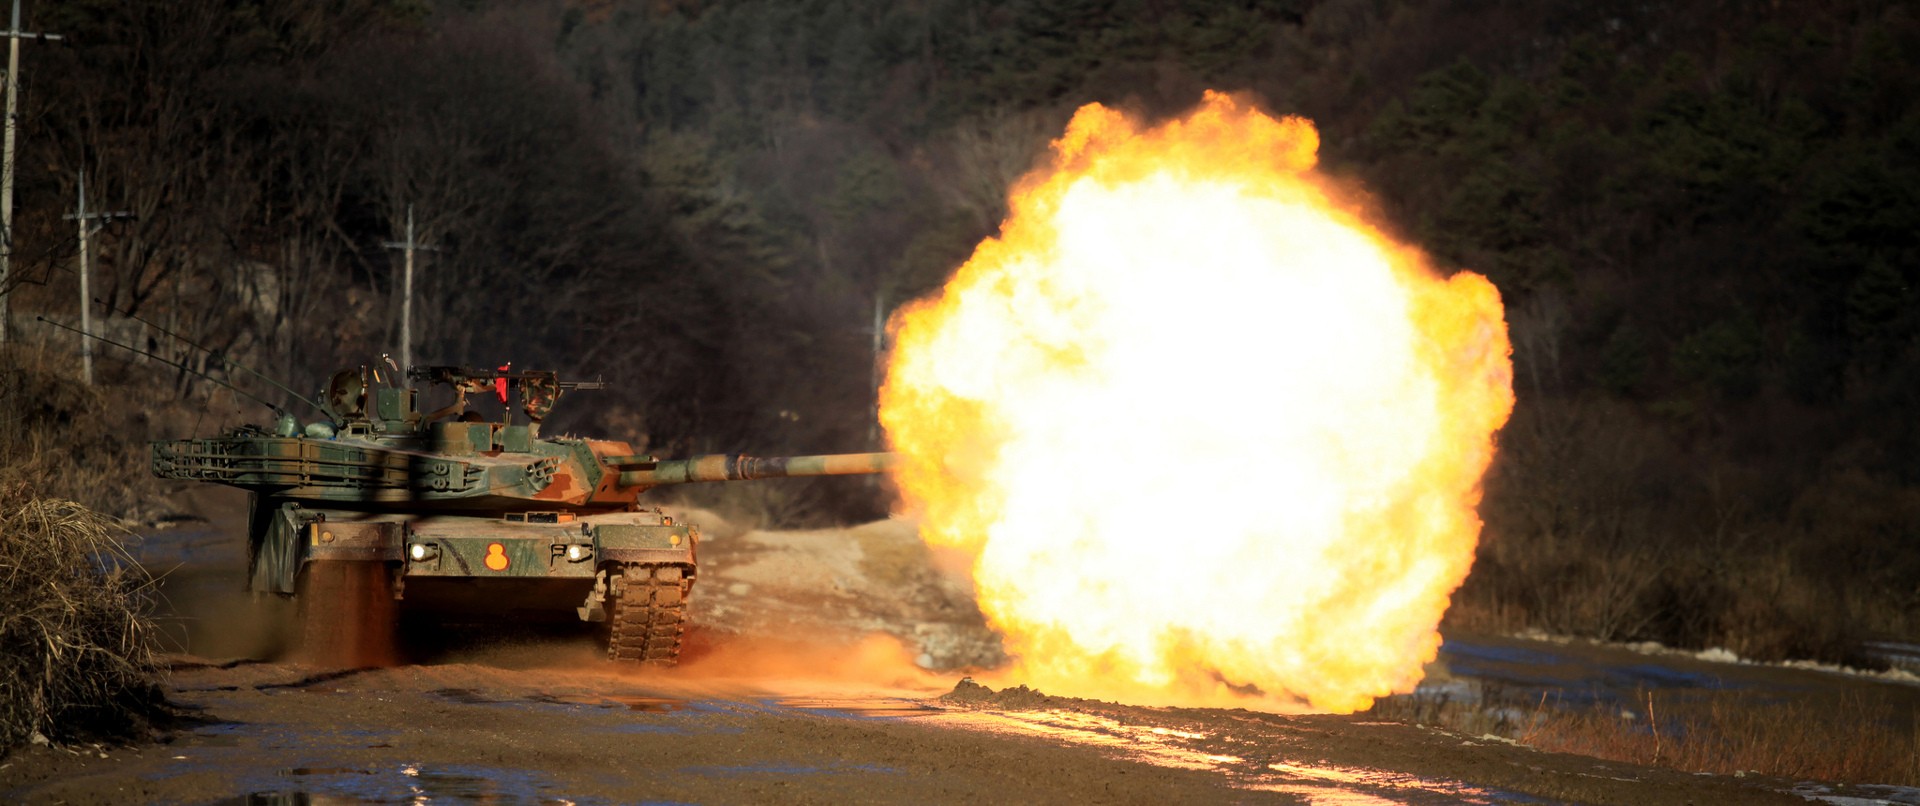 General 1920x806 military tank Republic of Korea Armed Forces vehicle military vehicle K1 88-Tank ROK Army shooting blast South Korea 2014 (Year)